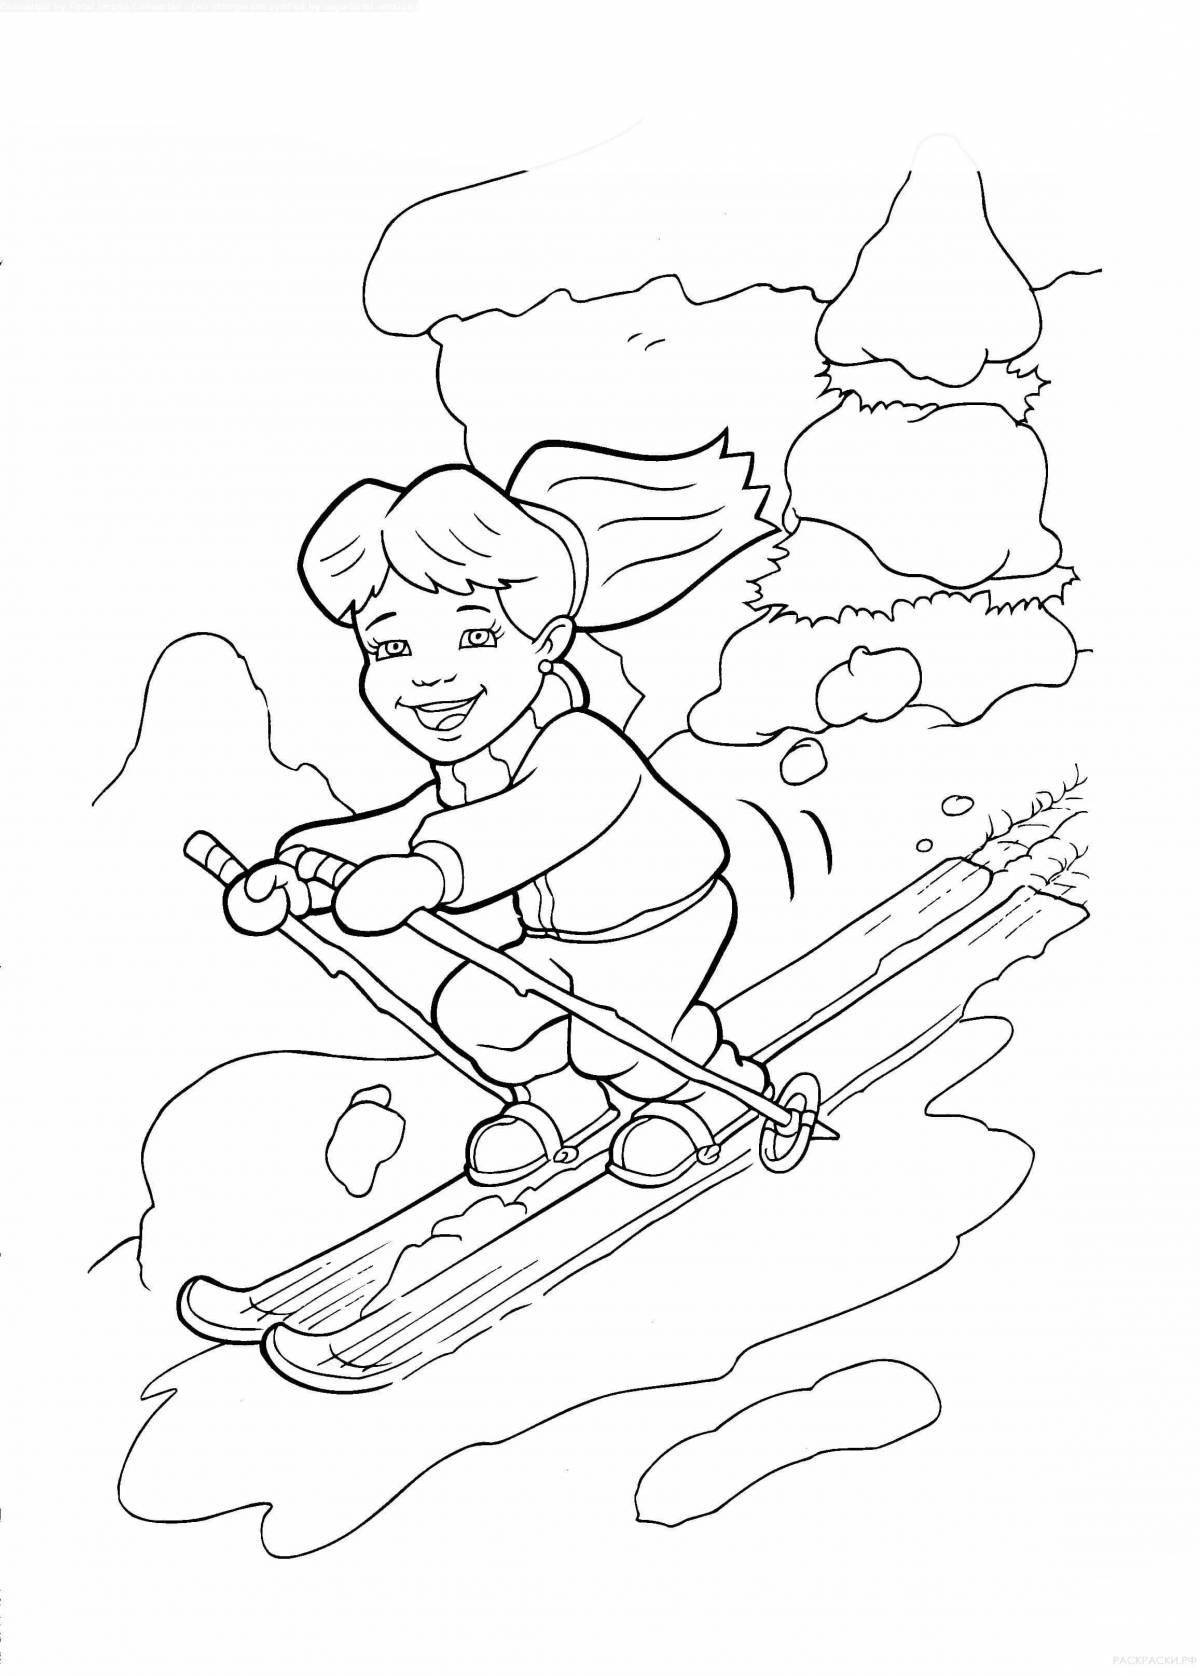 Fun skiing coloring book for kids